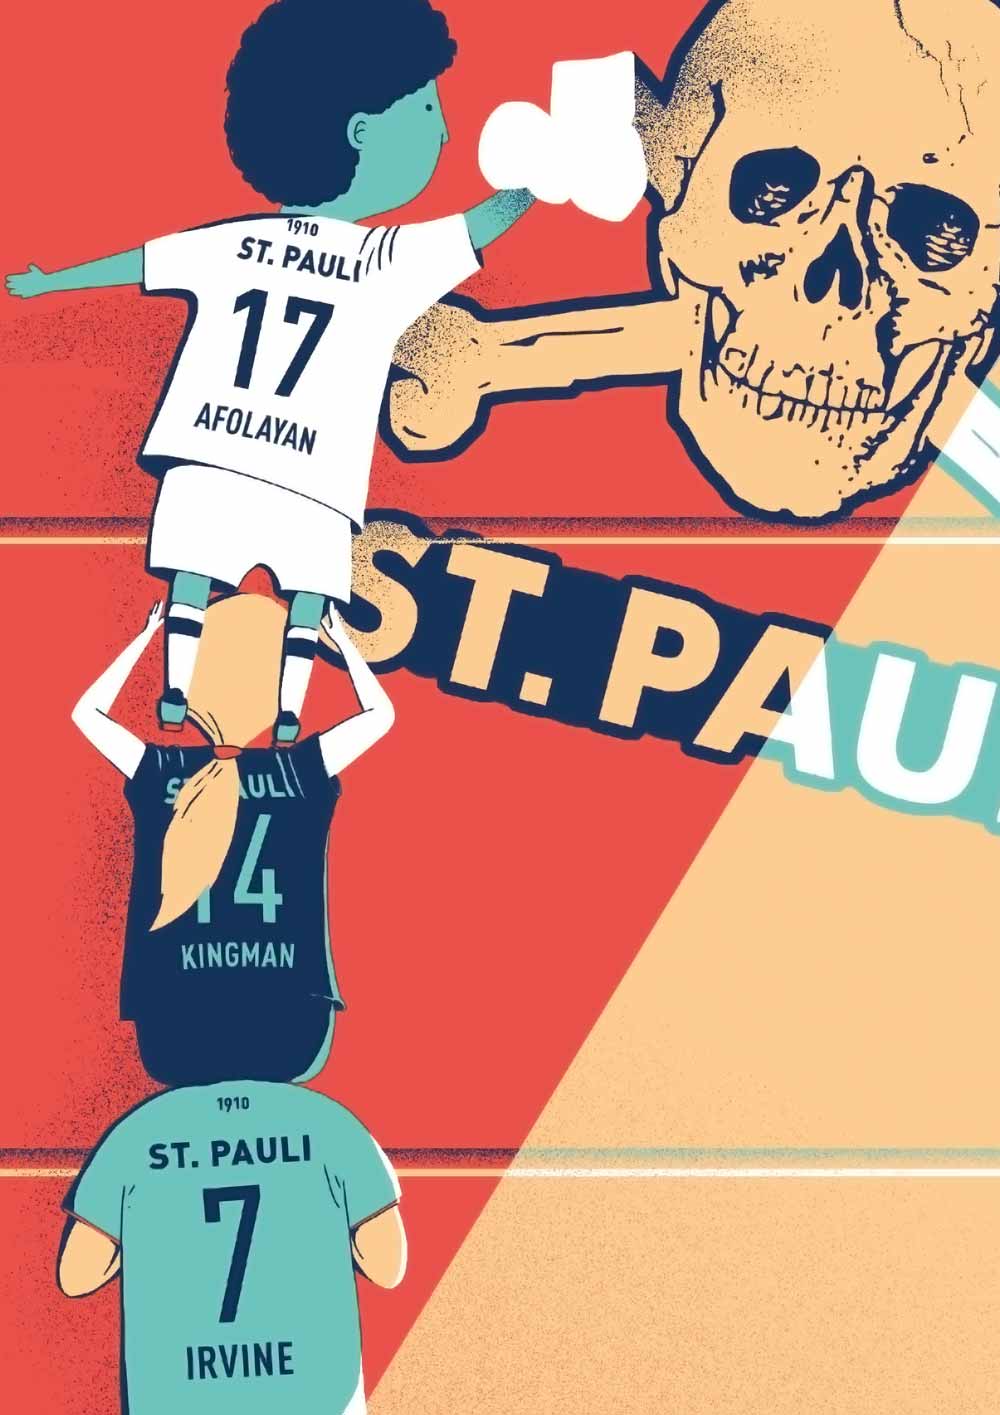 Art Print #7: Print-ciples of FC St. Pauli 